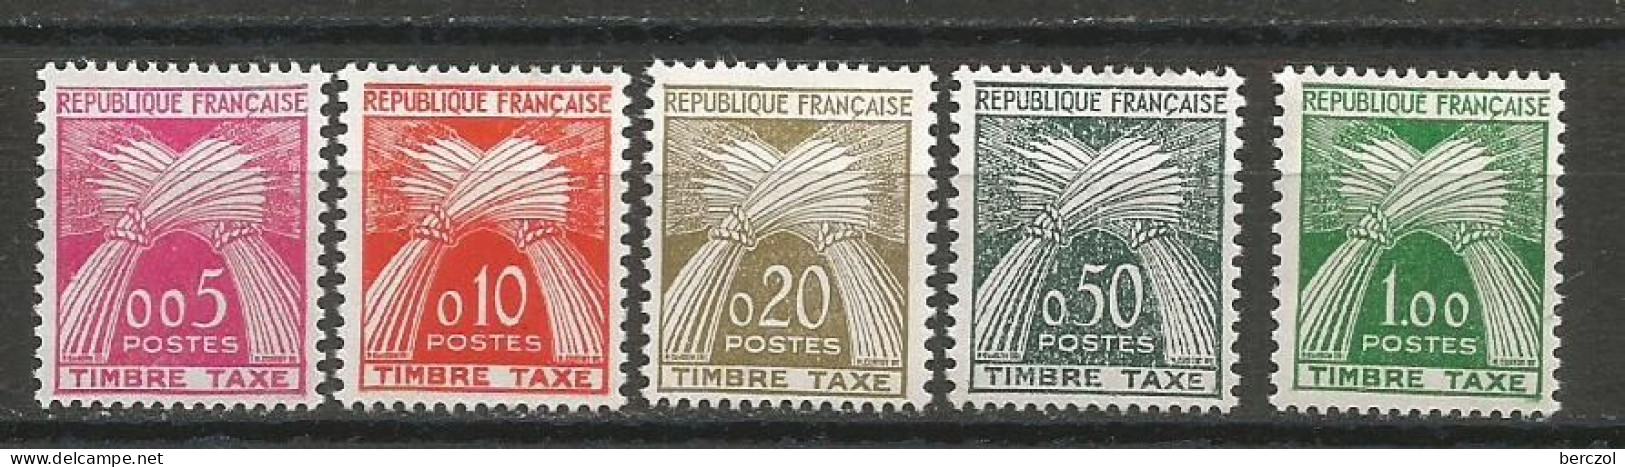 FRANCE ANNEE 1960 TAXE LOT DE 5 TP N°90 à 94 NEUFS ** MNH TB COTE 70,00 €  - 1960-.... Nuovi